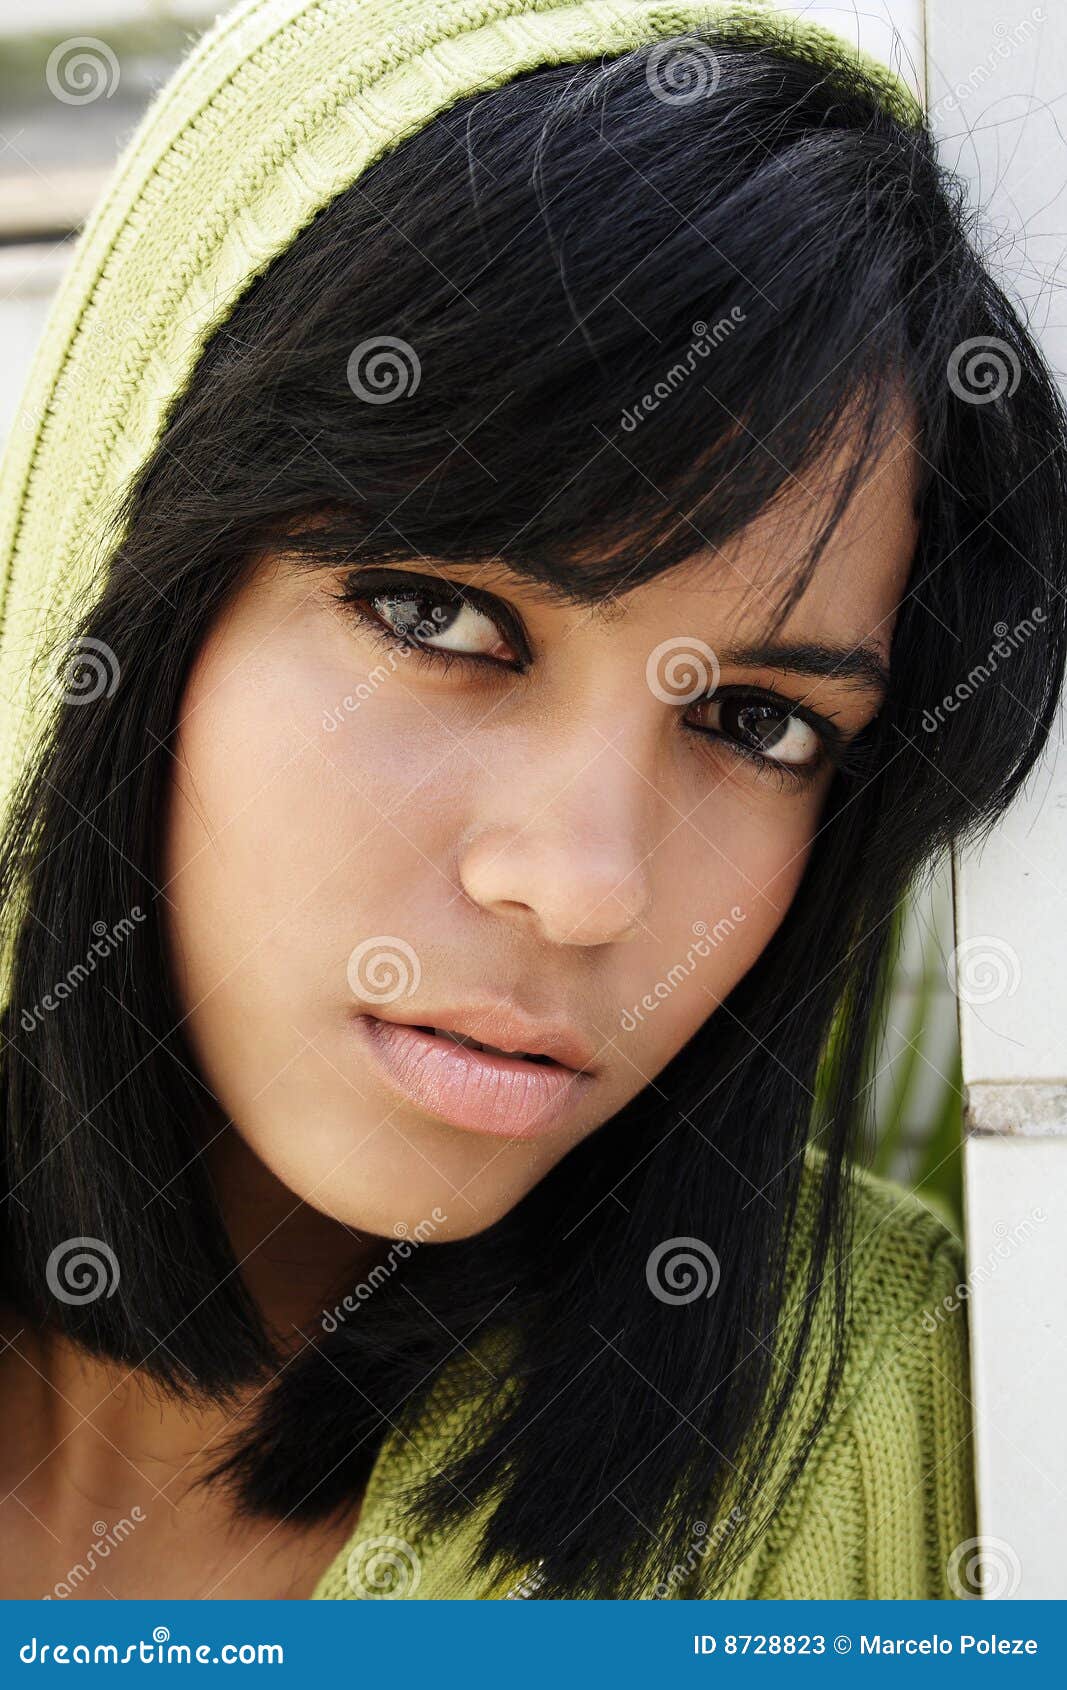 Black hair and eyes stock image. Image of models, latin - 8728823